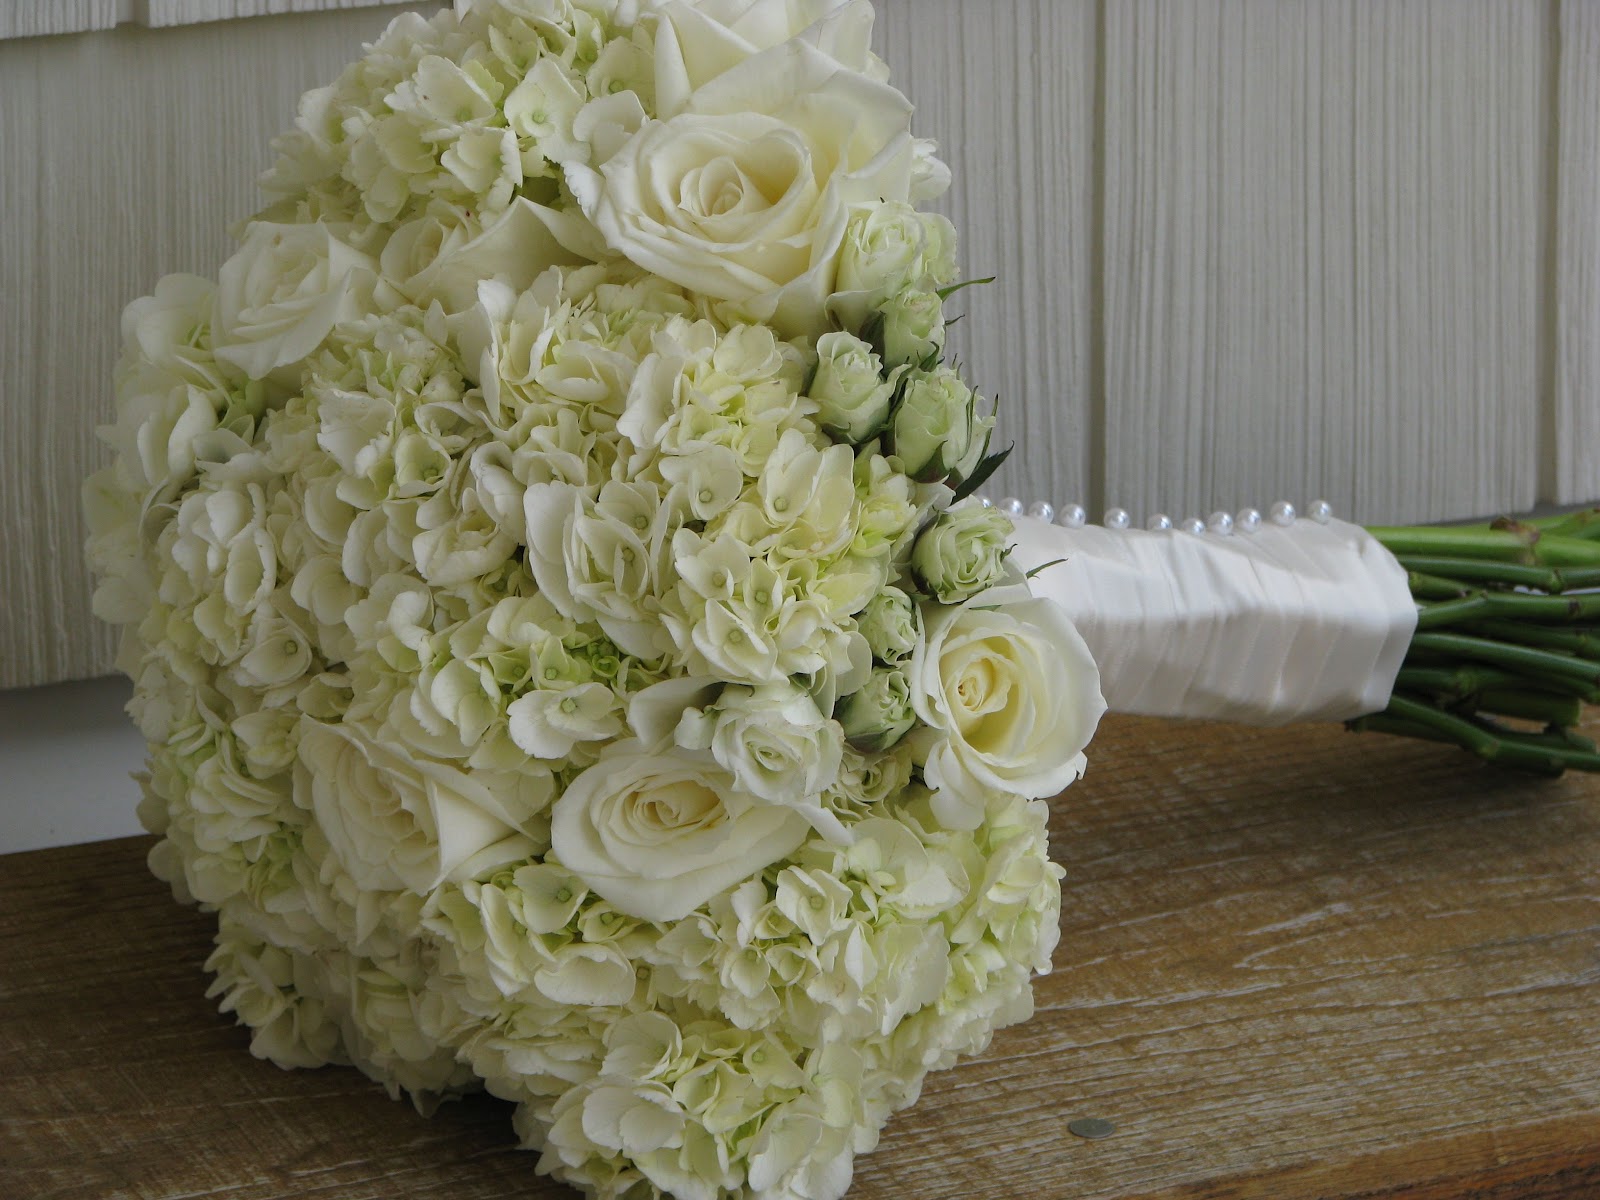  Elegant! It had white hydrangea, white roses and white spray roses